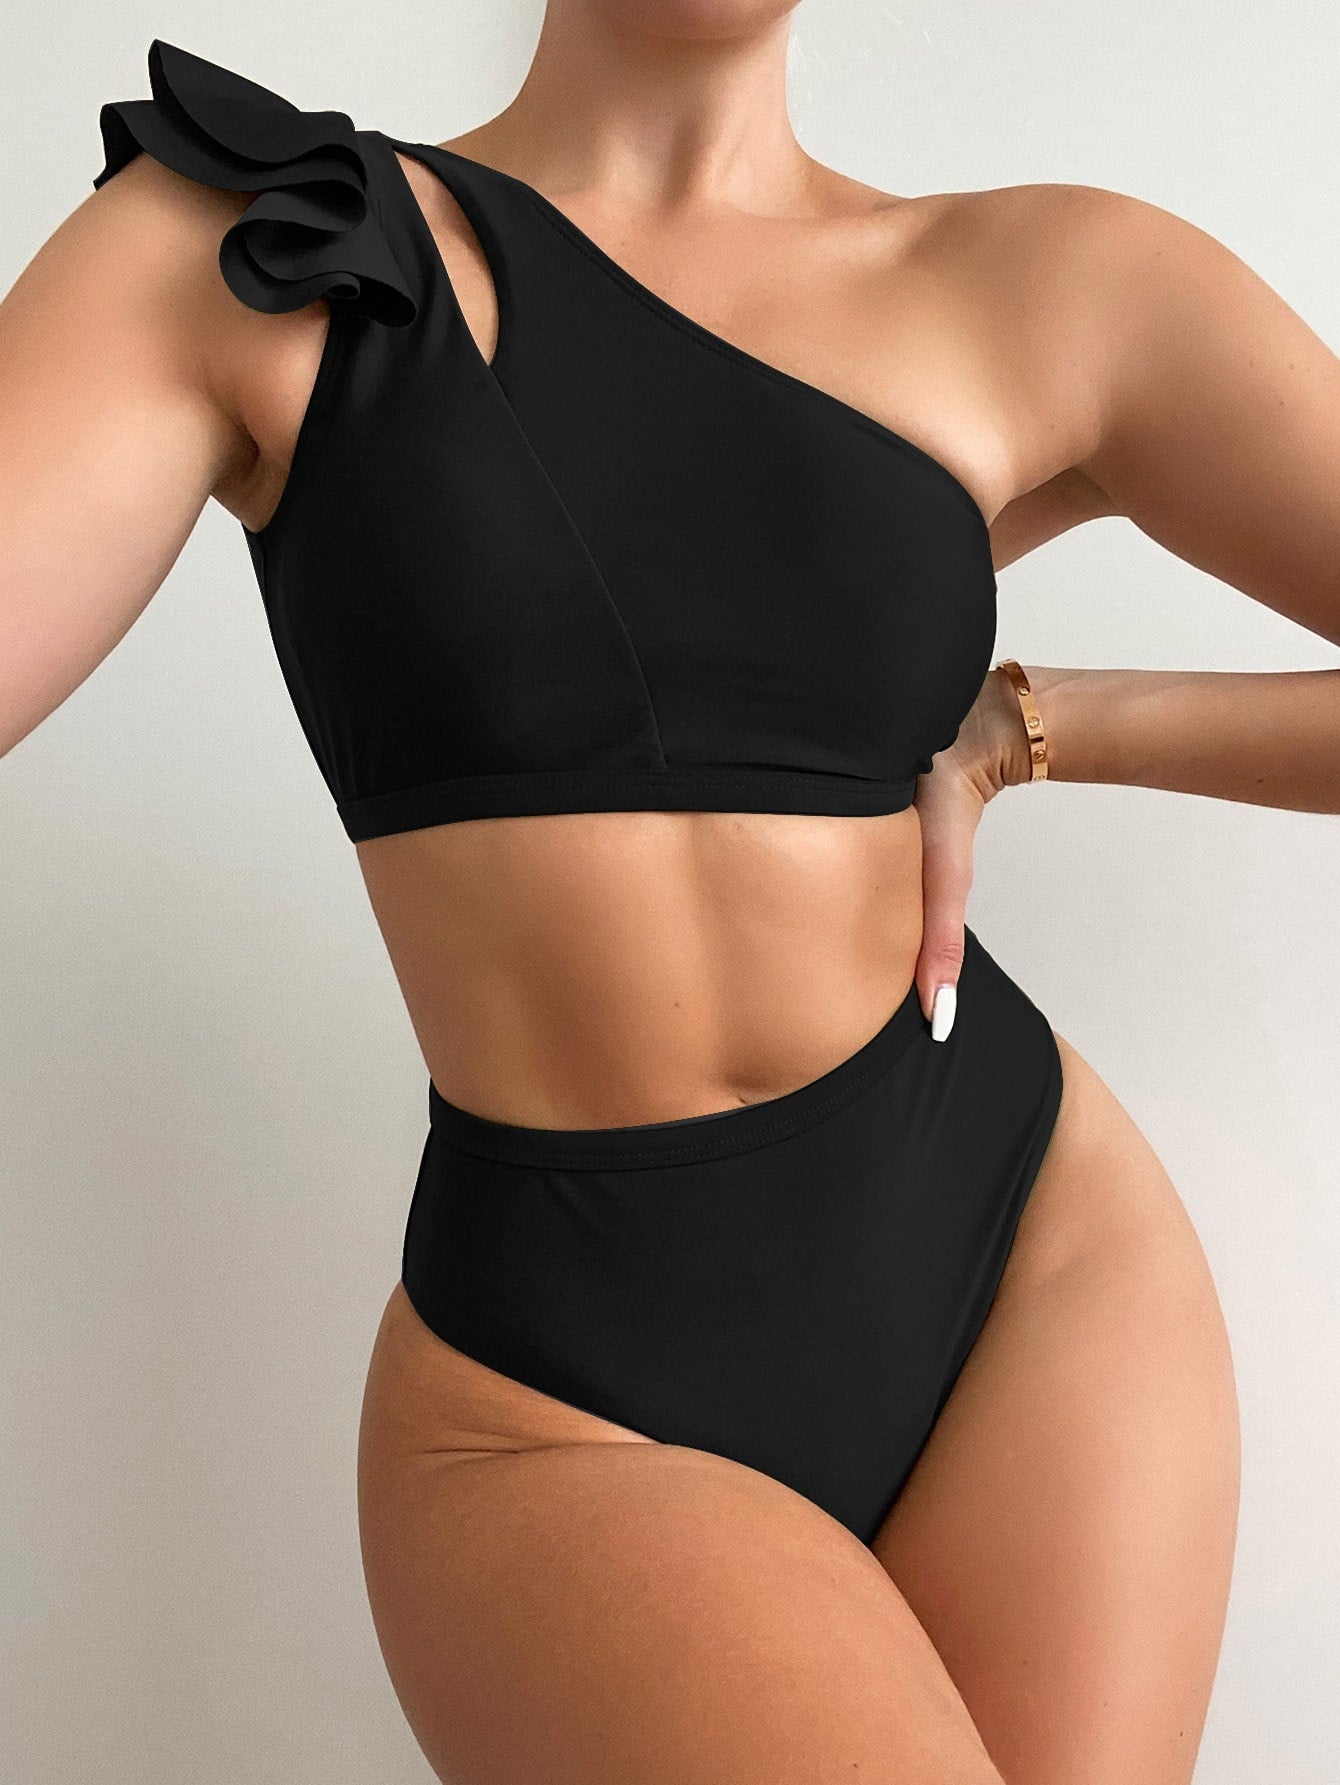 Mono Bikini Set Ruffle Trim One Shoulder Wireless Bra Top & High Waist Bikini Bottom 2 Piece Swimsuit